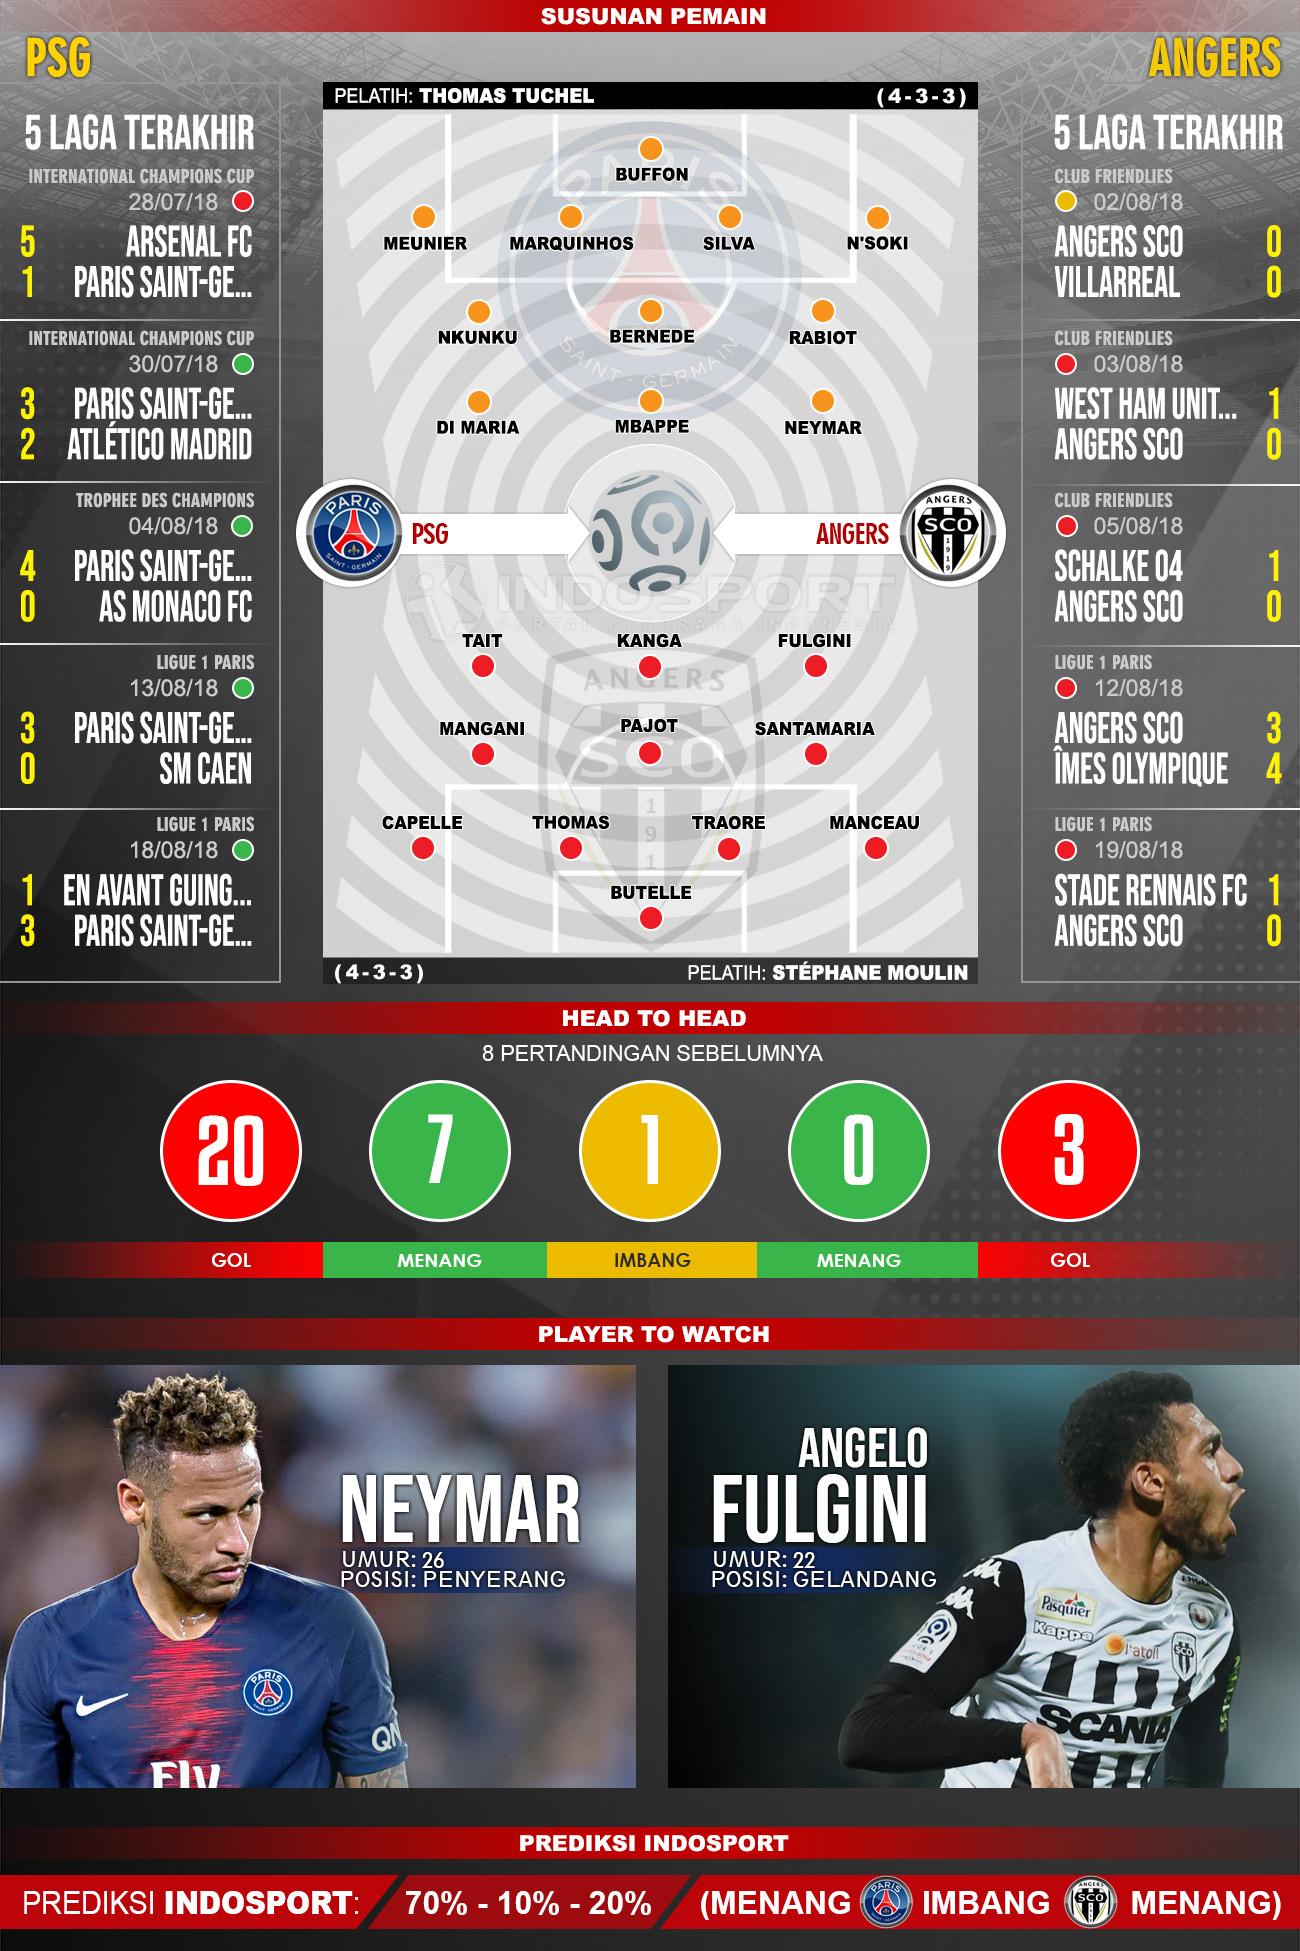 Paris Saint Germain vs Angers (Susunan Pemain - Lima Laga Terakhir - Player to Watch - Prediksi Indosport) Copyright: Indosport.com